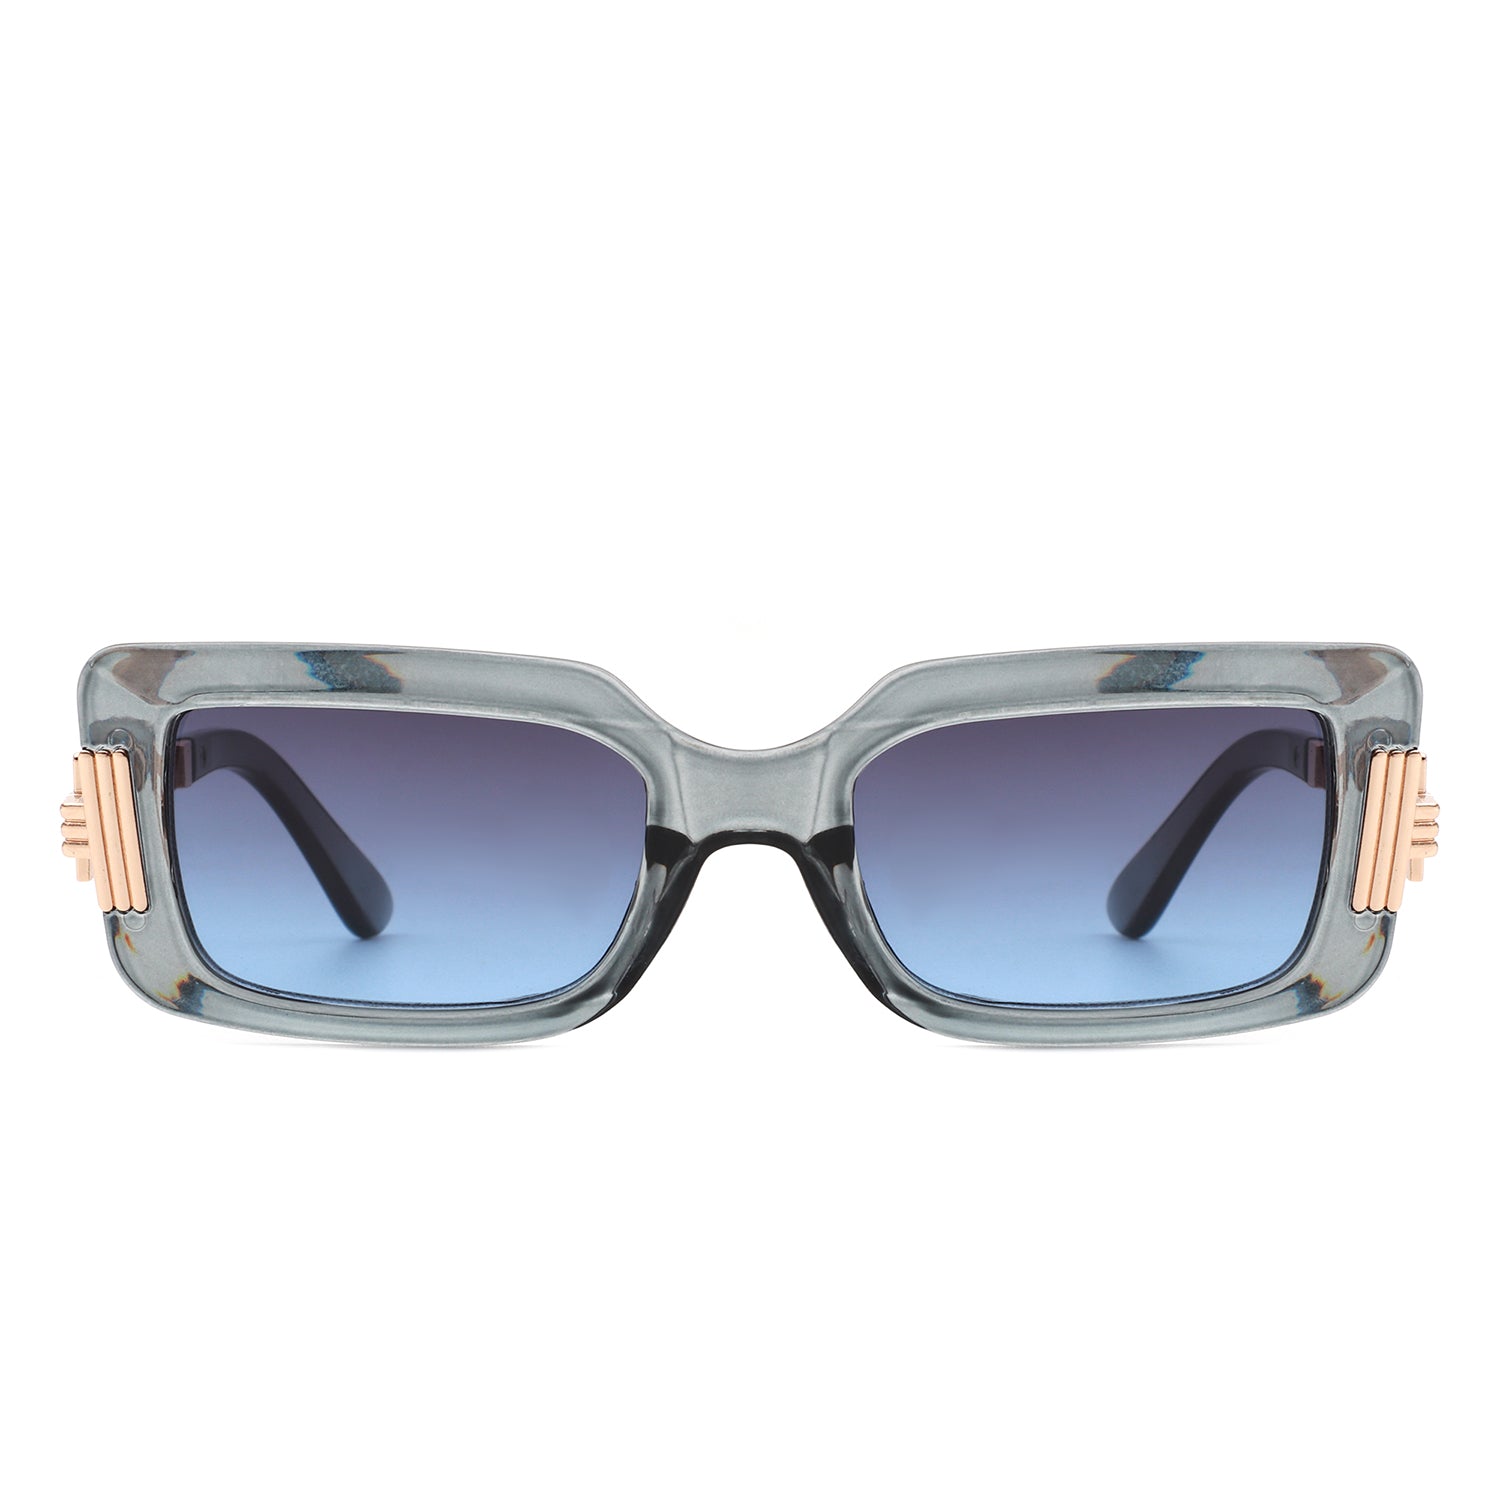 HS2117 - Women Chic Square Irregular Design Fashion Sunglasses